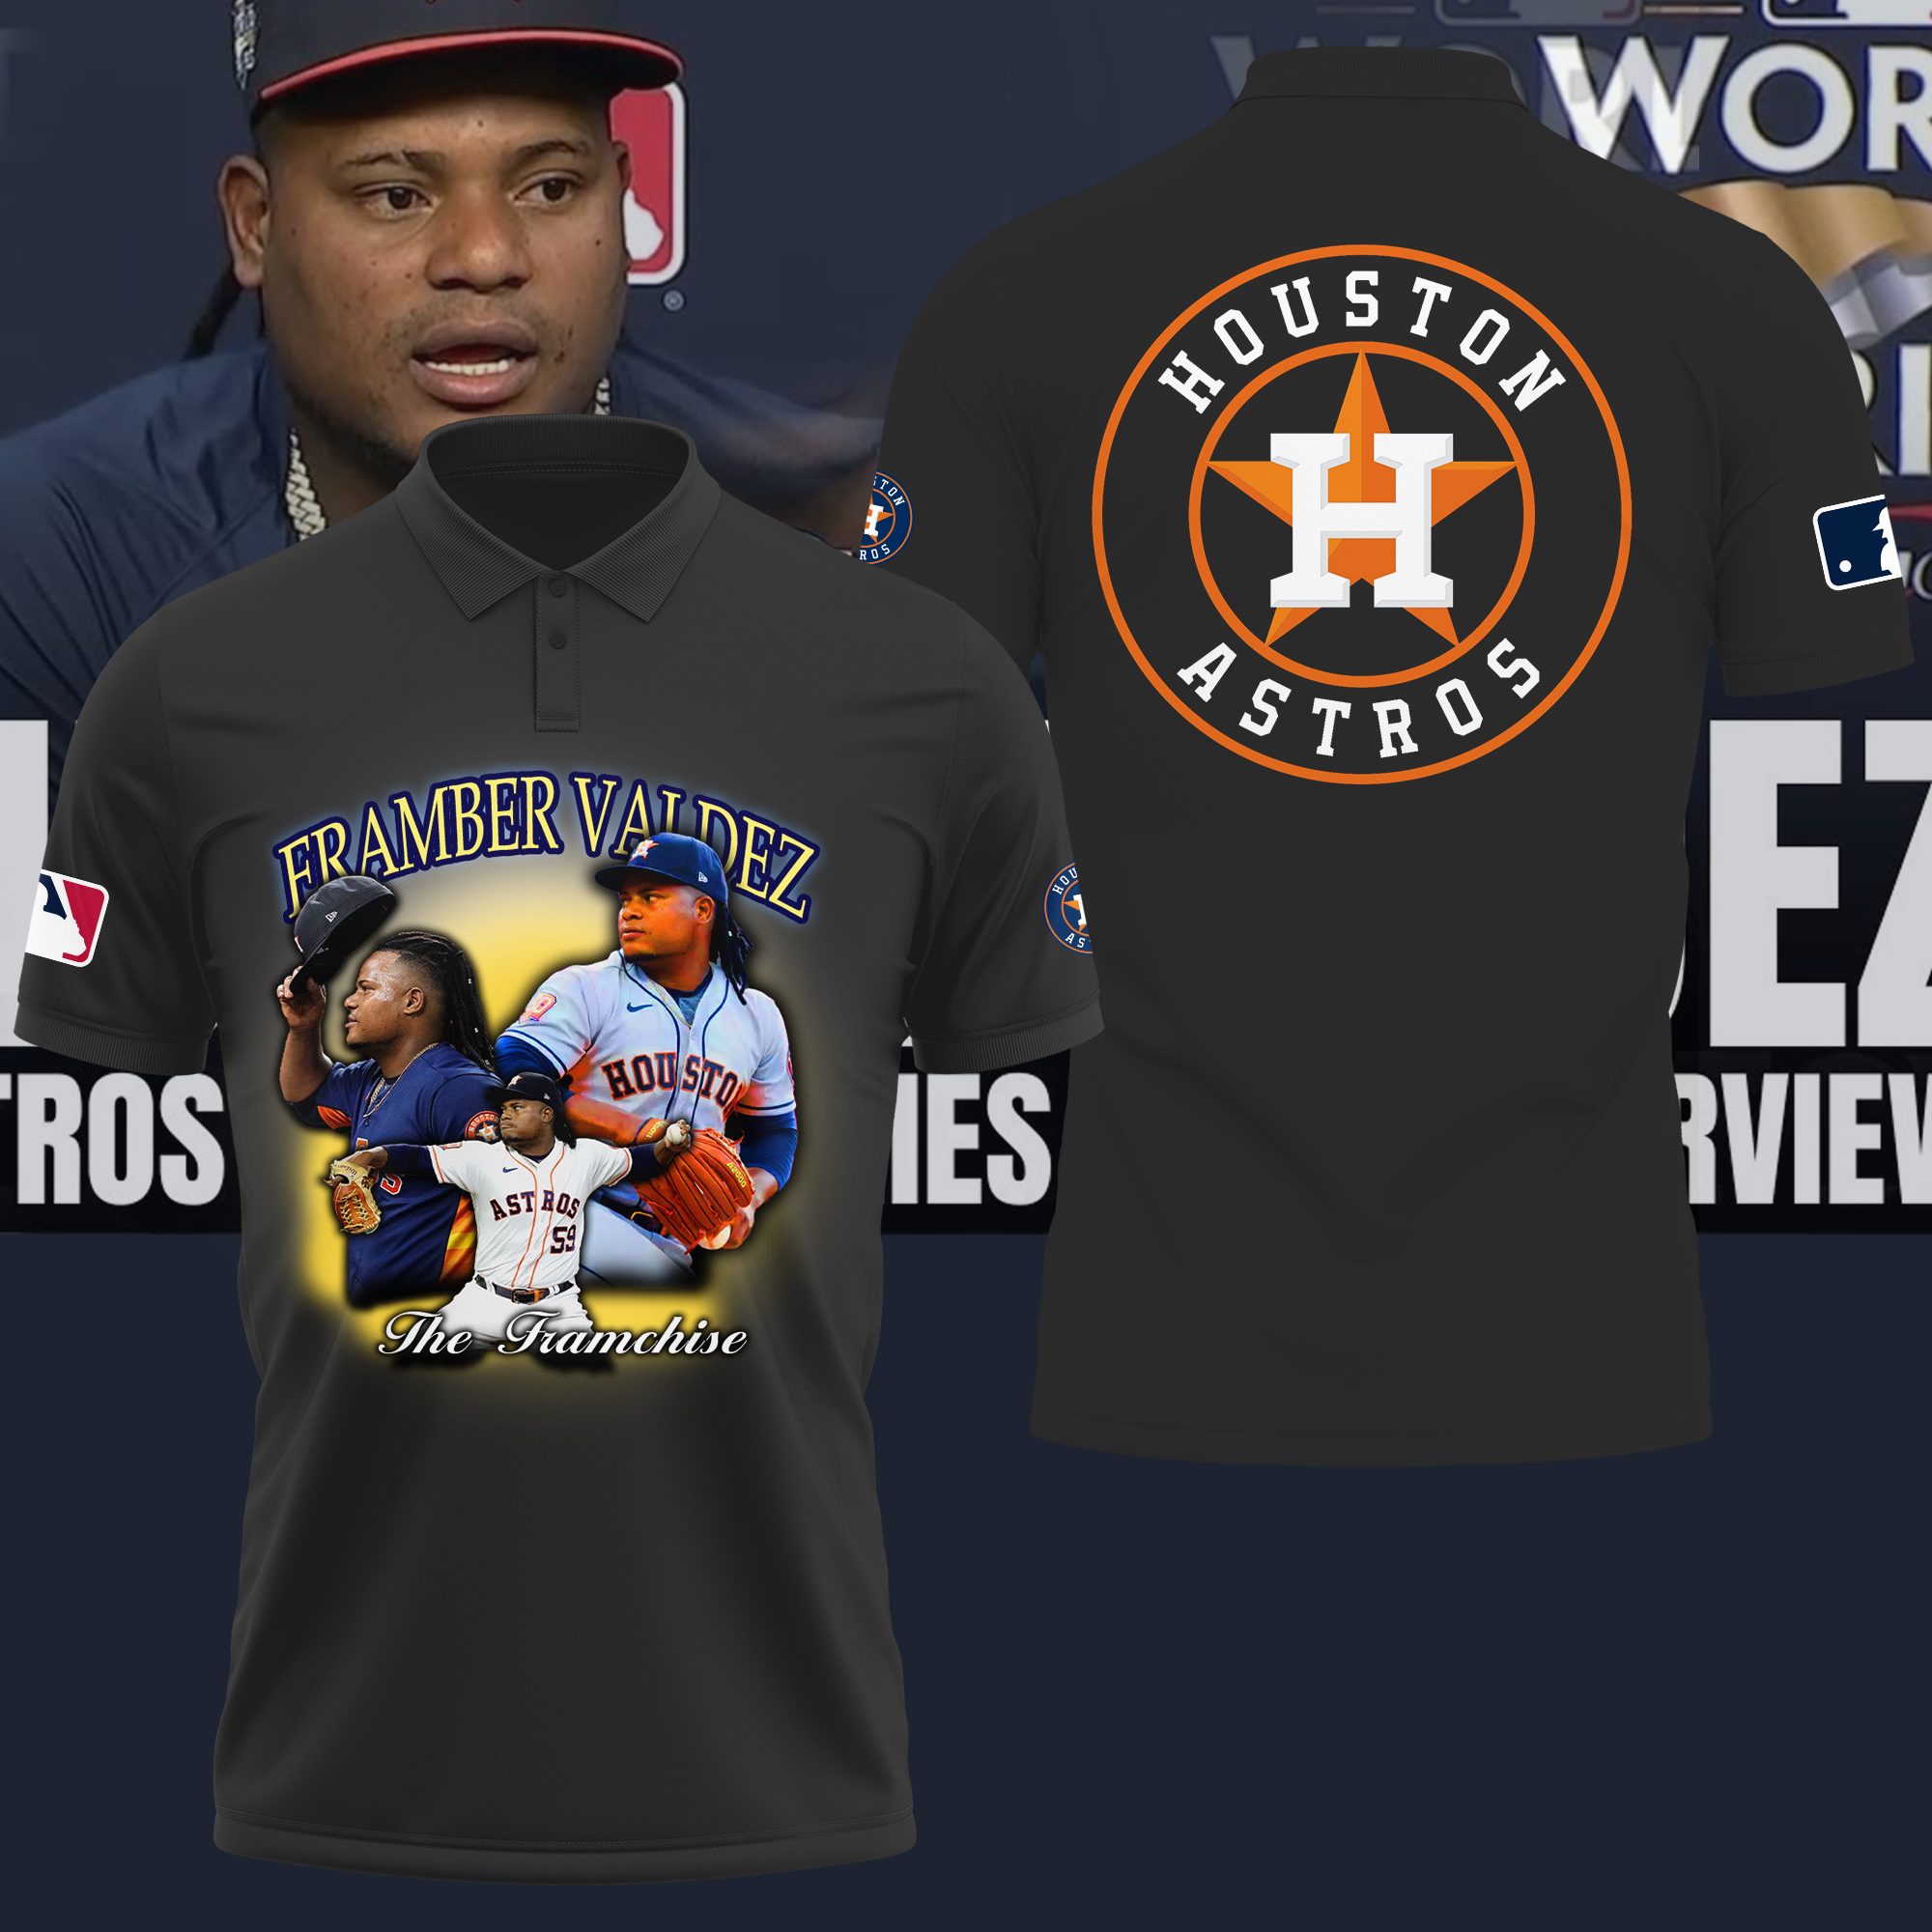 Astros wearing Framber Valdez shirts before World Series Game 6